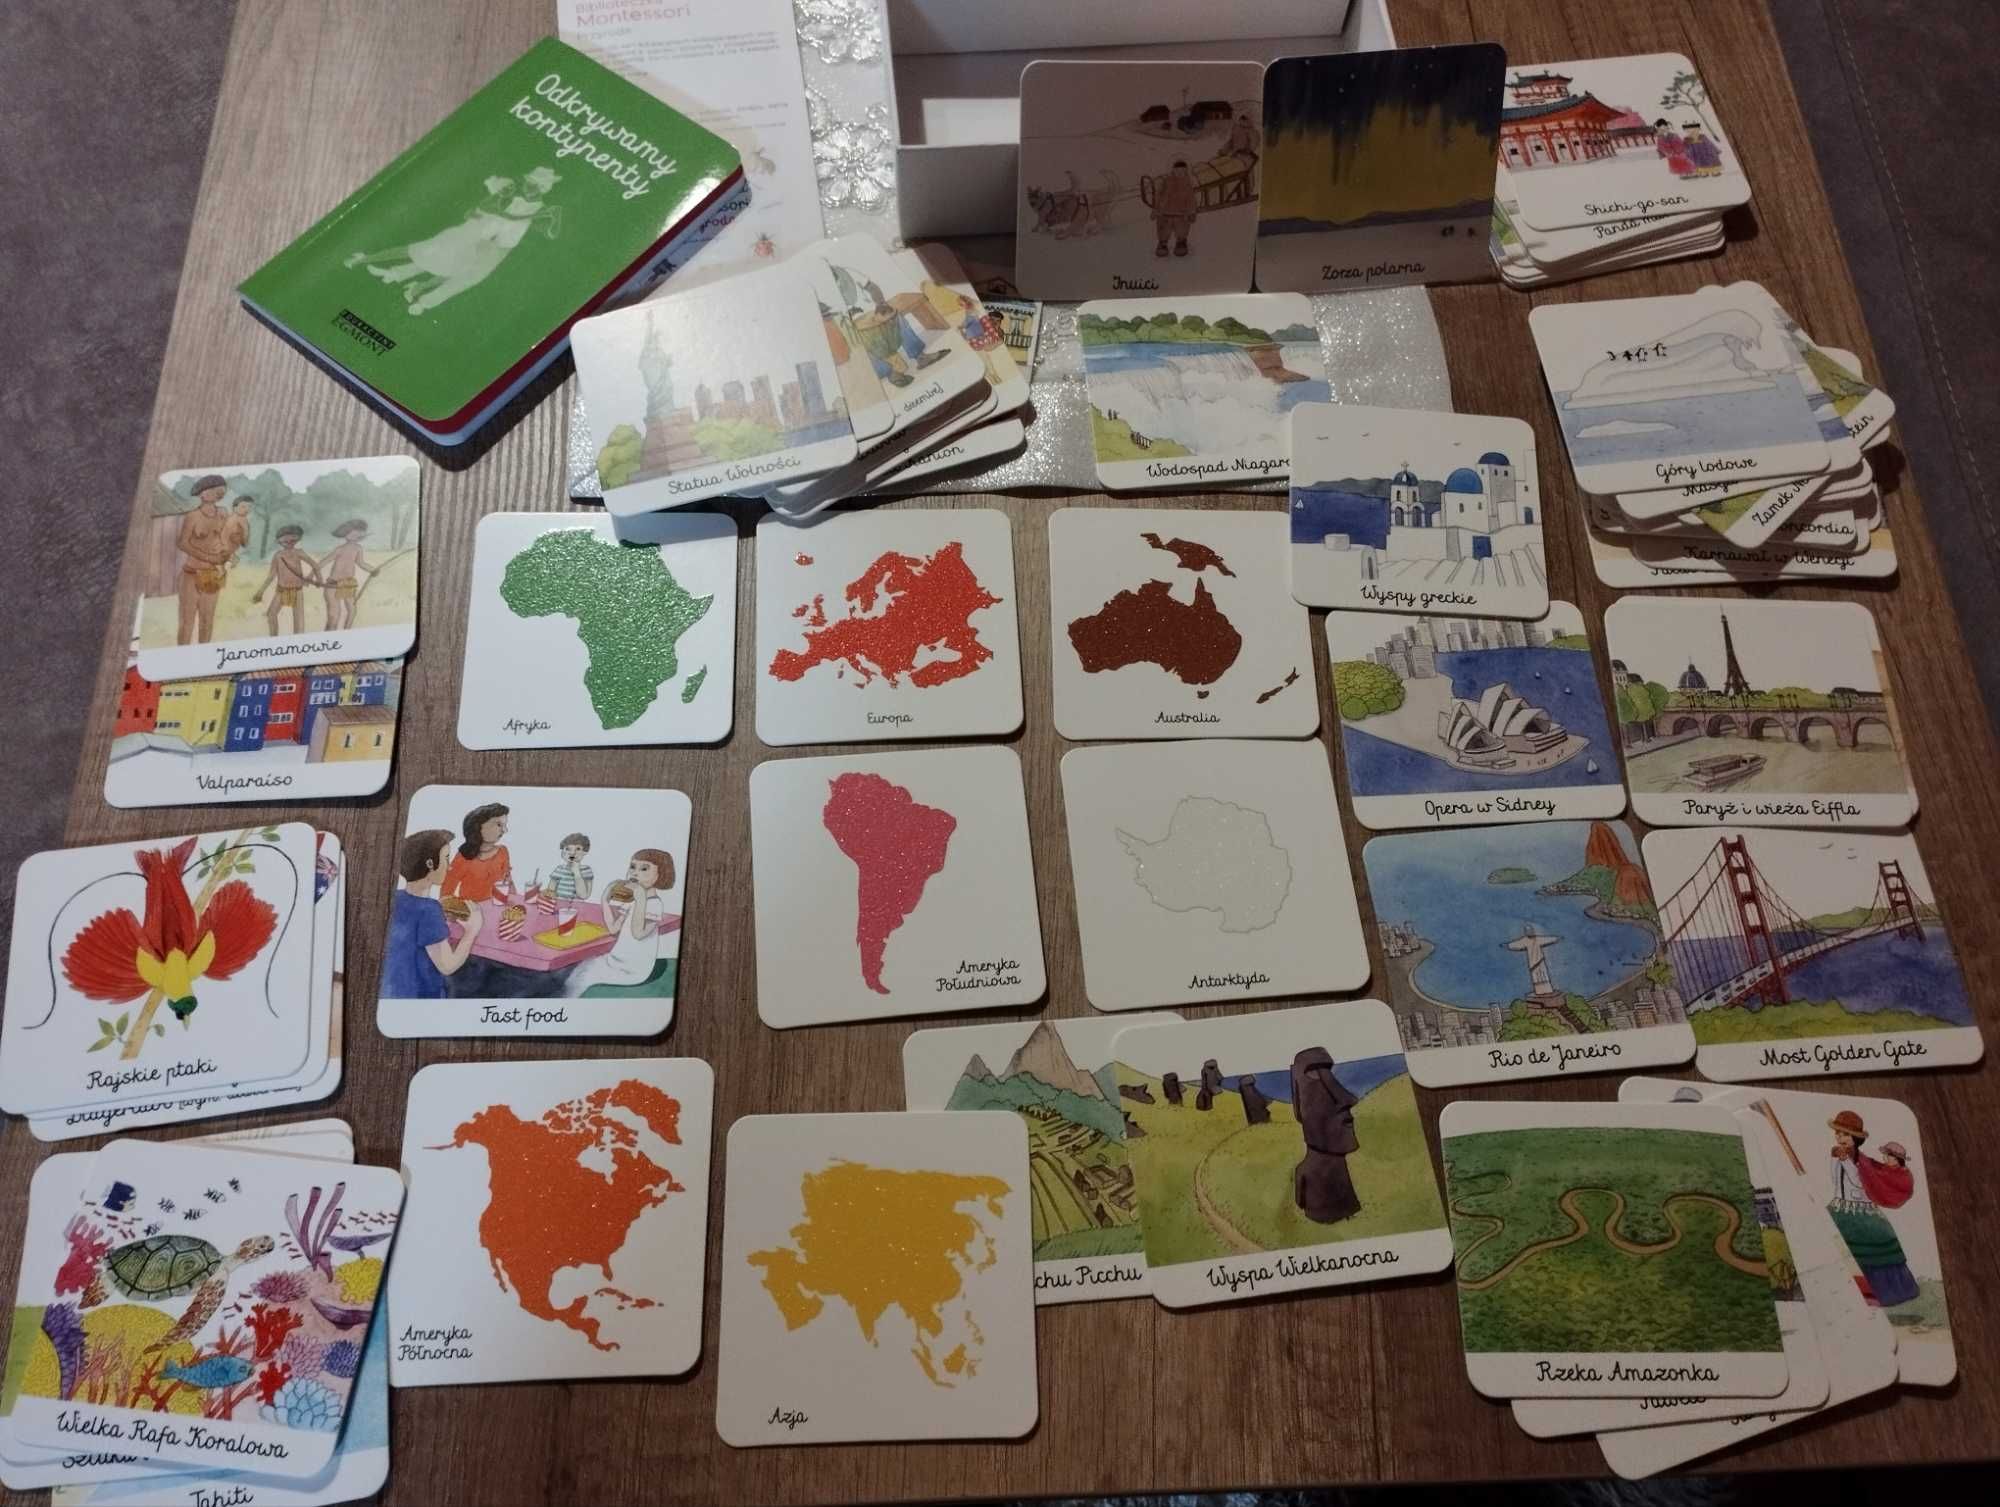 Biblioteczka Montessori Świat Egmont 77 kart